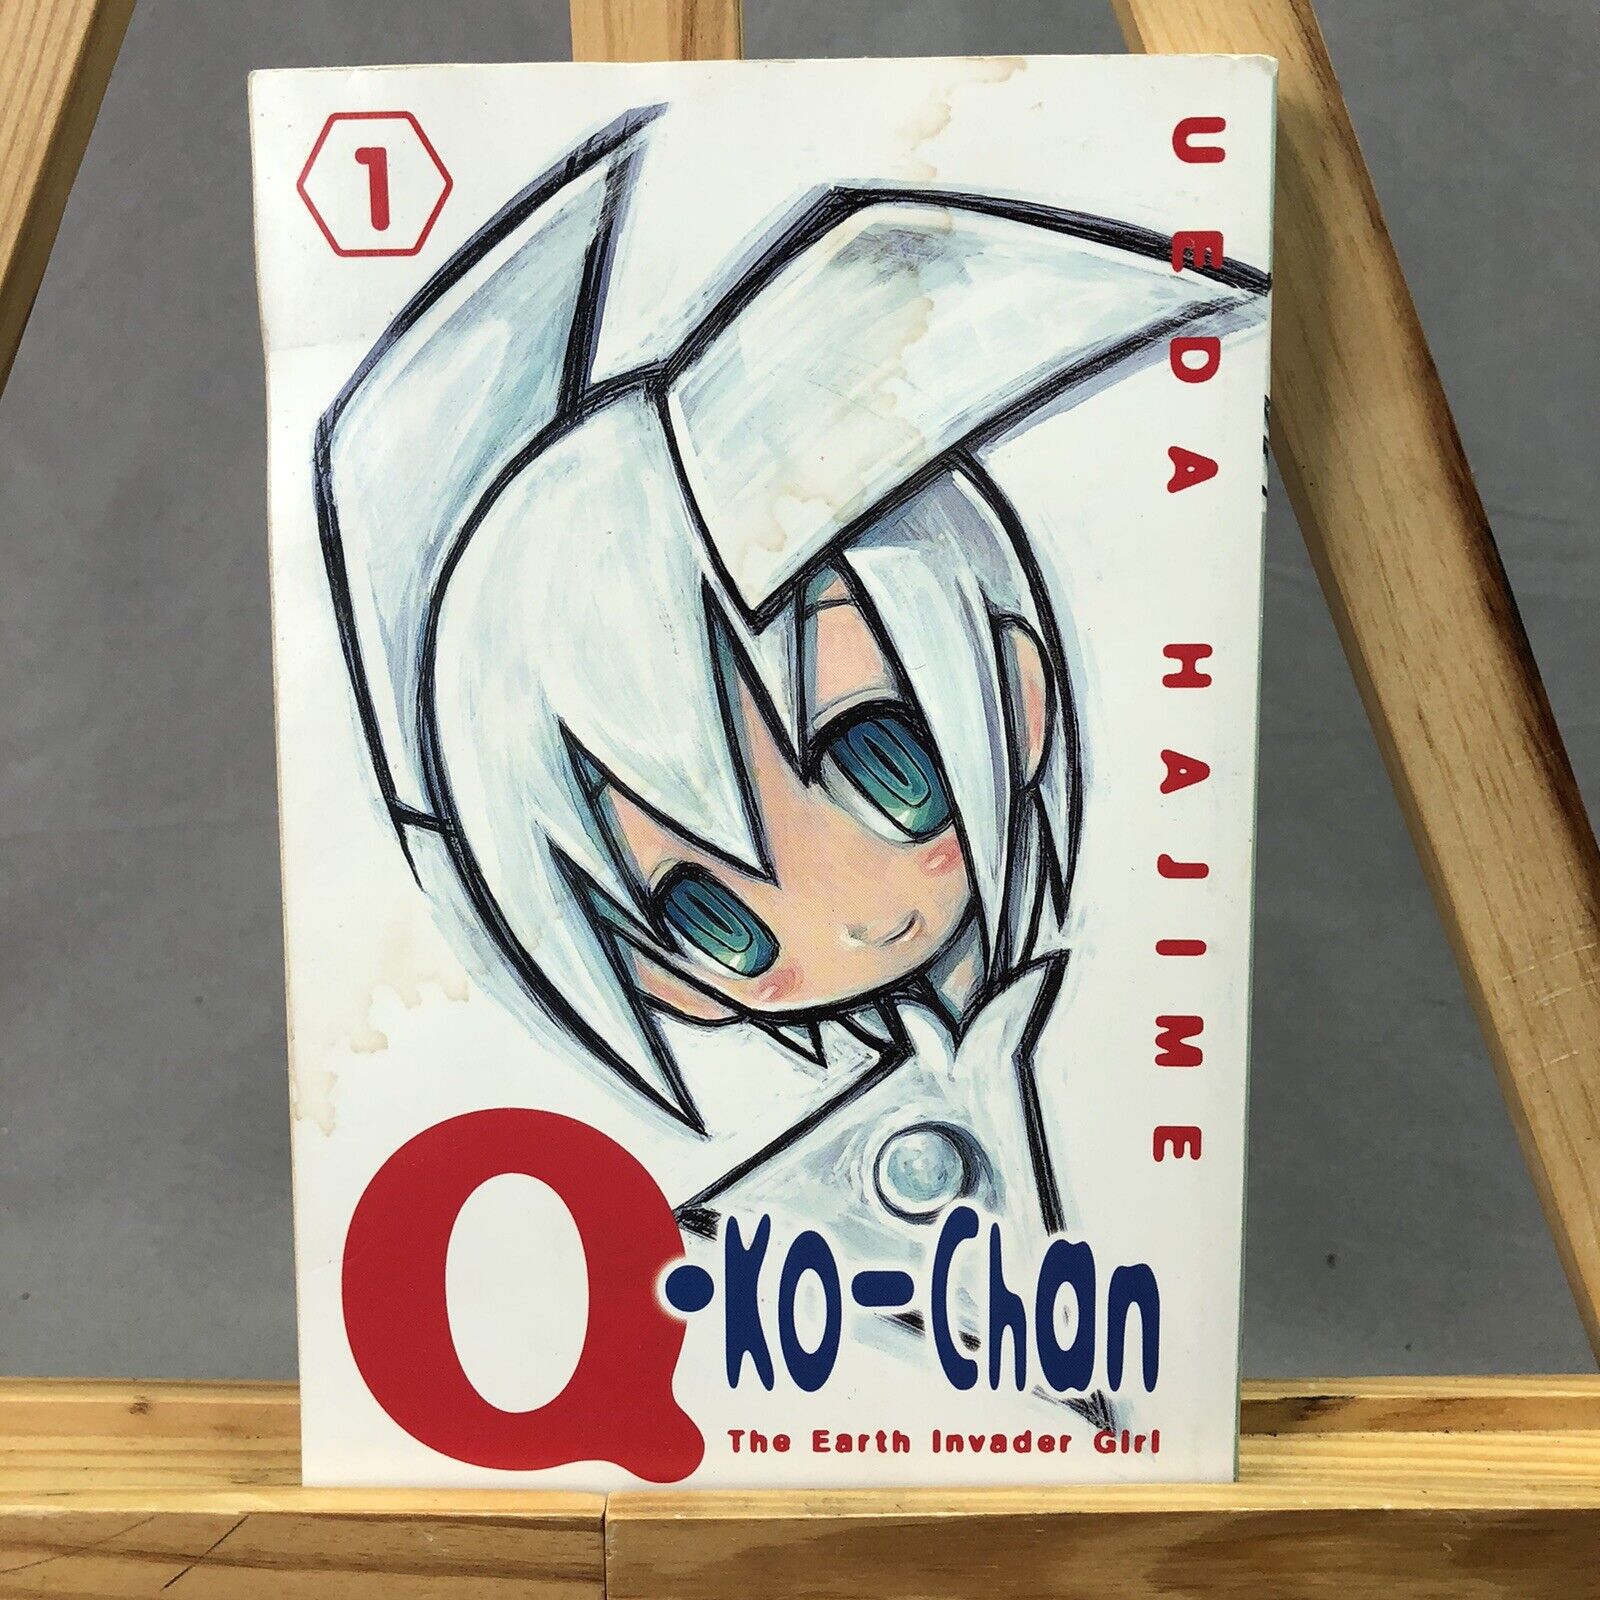 Q-KO-CHAN THE EARTH INVADER GIRL BY UEDA HAJIME VOLUME 1 